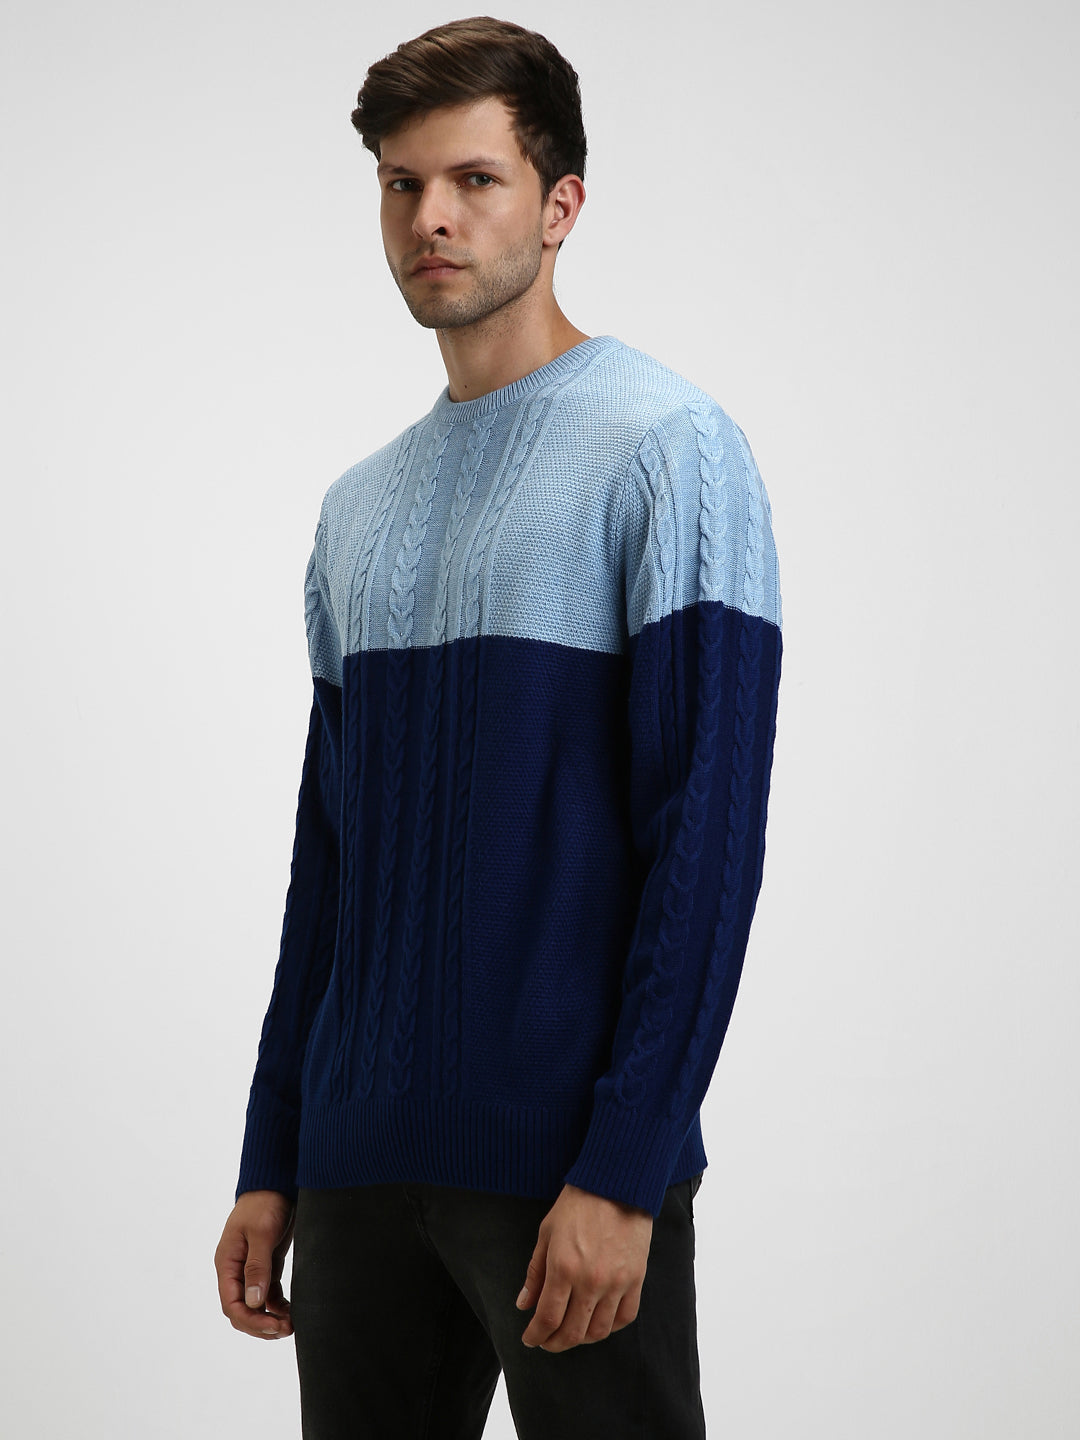 Dennis Lingo Men's Lt Blue Colorblock  Full Sleeves Pullover Sweater